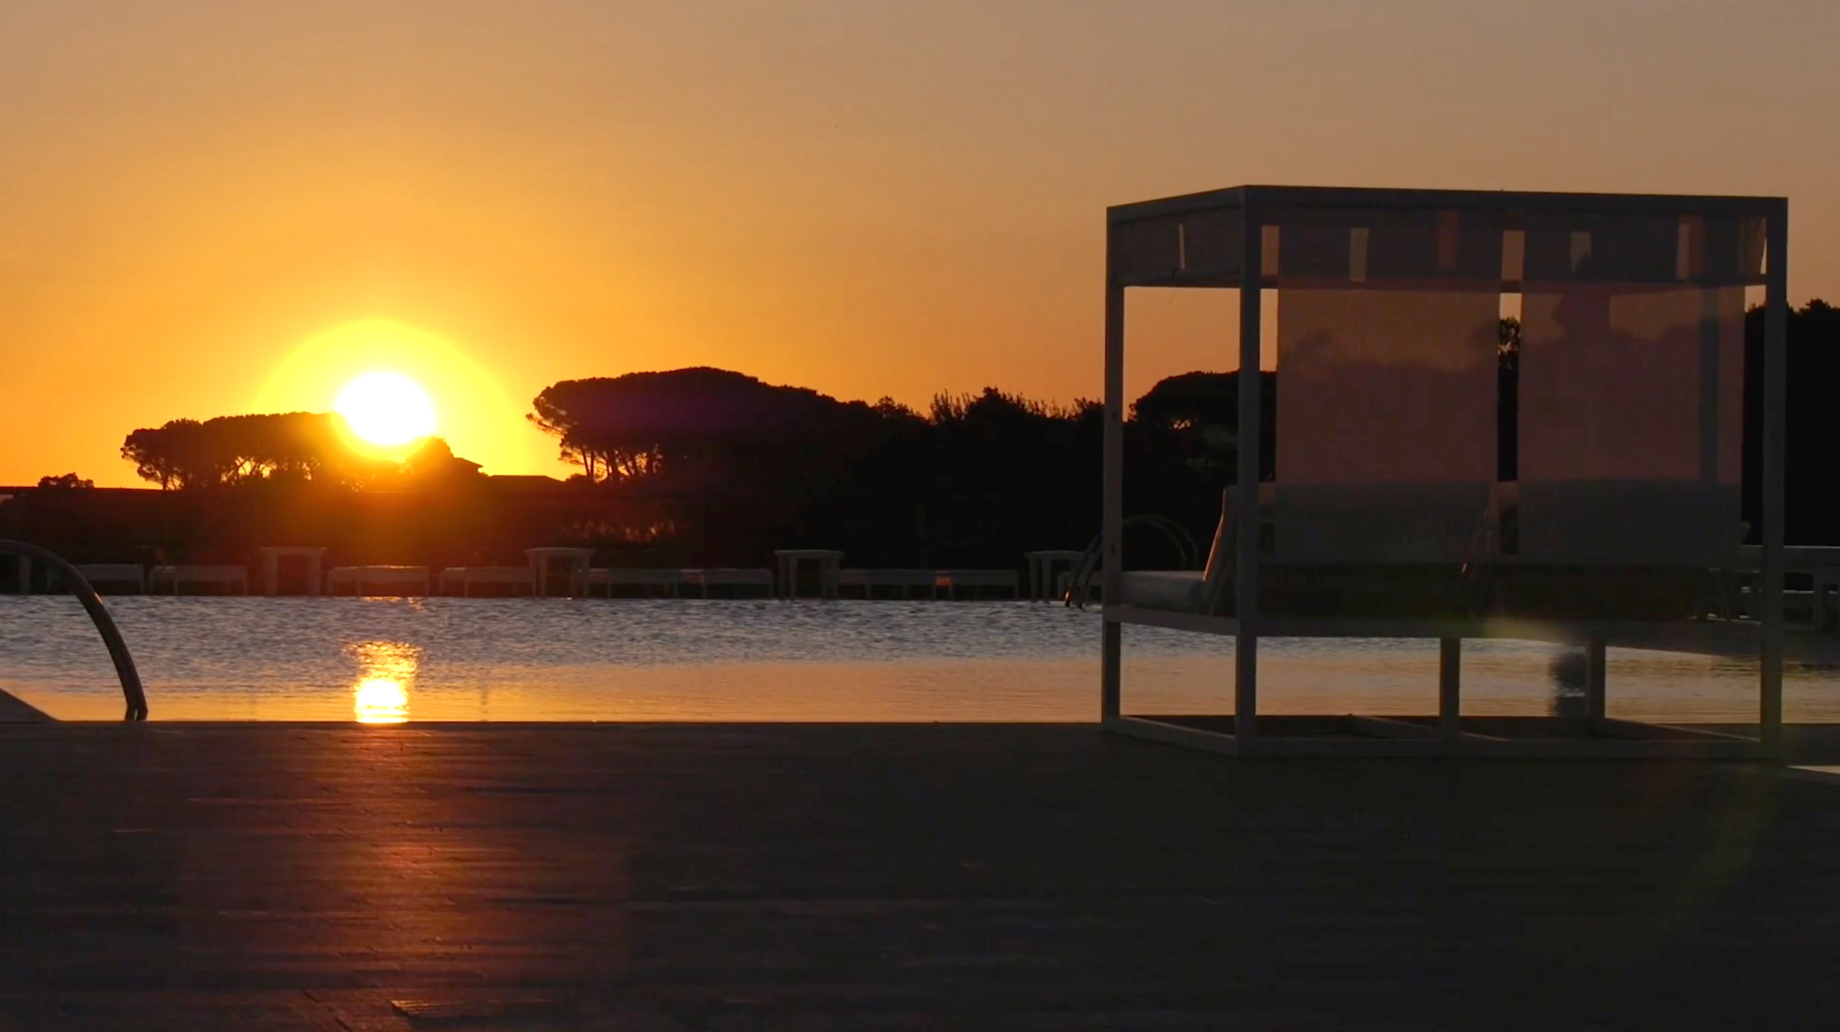 Baglioni Resort Sardinia – San Teodoro, Sardegna, Italy – Pool Sunset